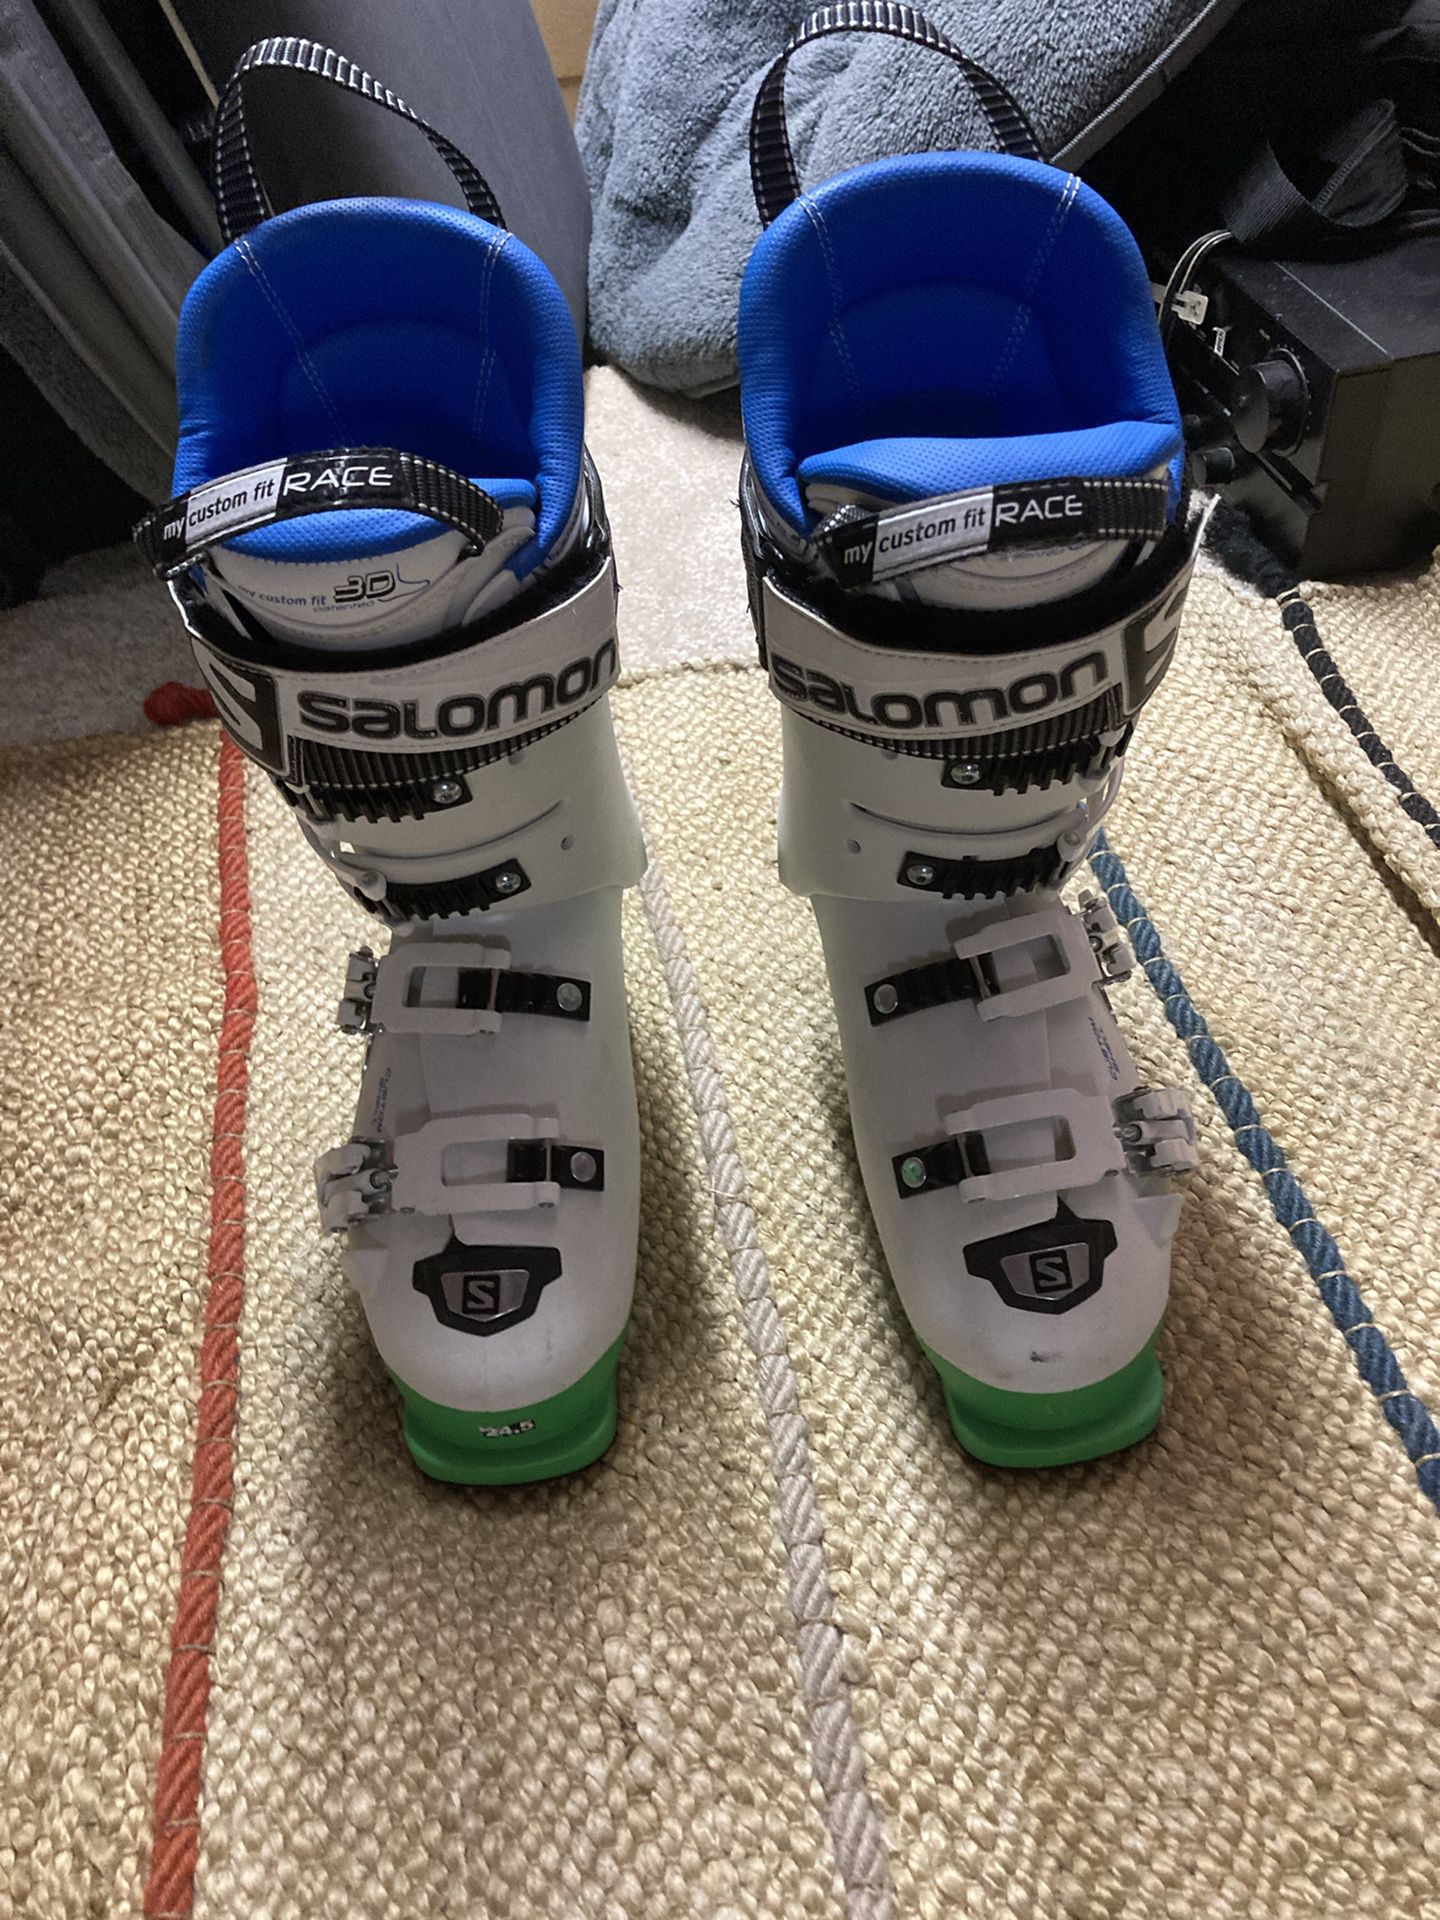 Cool Ski Boots Salomon My Custom Fit 3D 24.5 Msrp $419.95